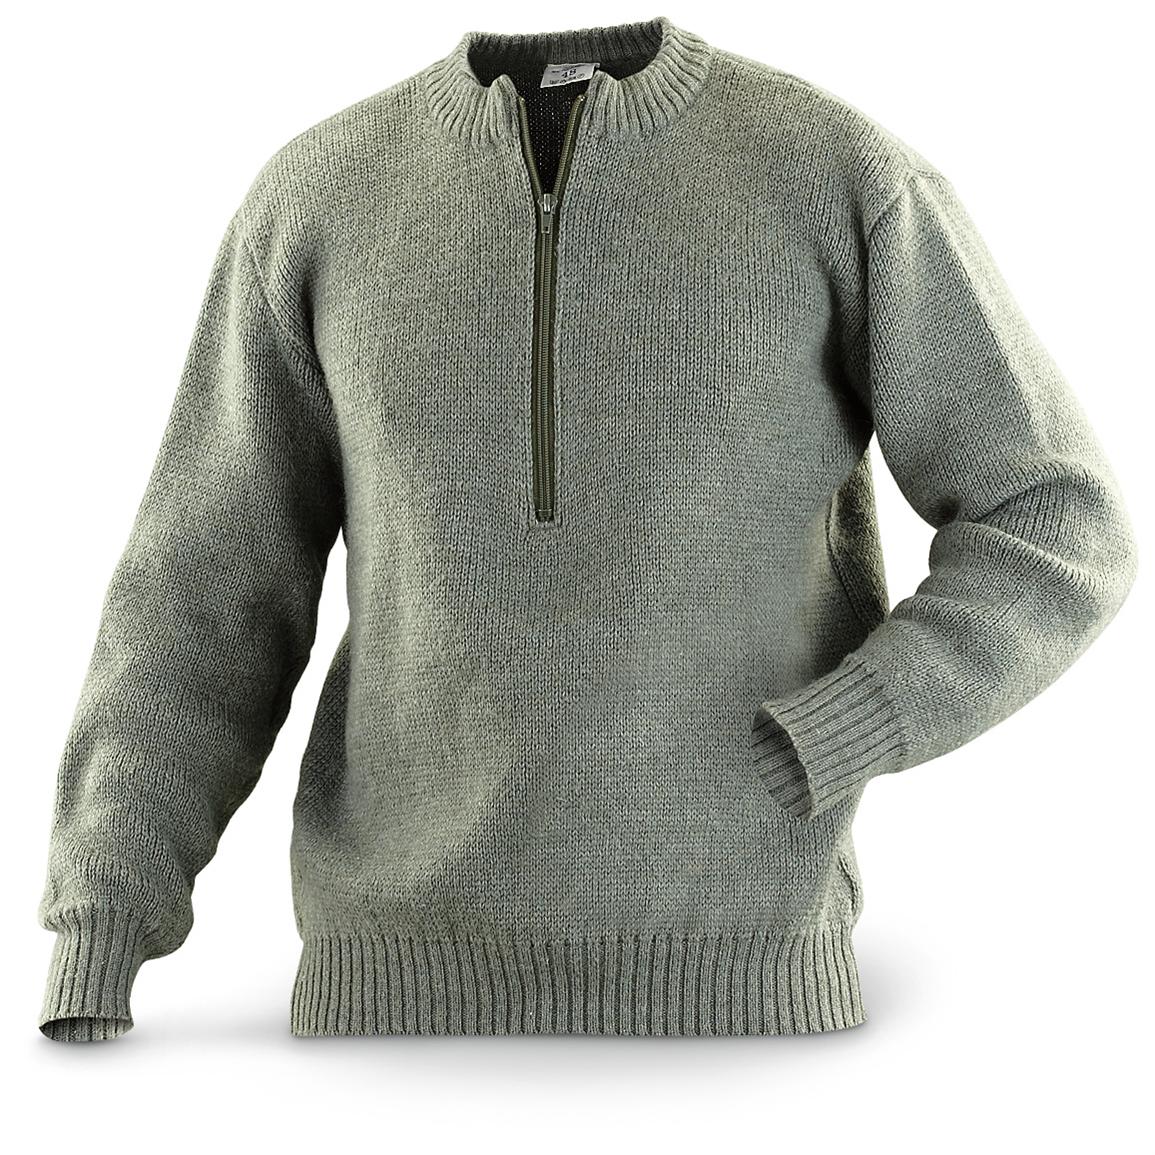 Swiss Military Surplus Heavyweight Wool Sweater, Used 211152